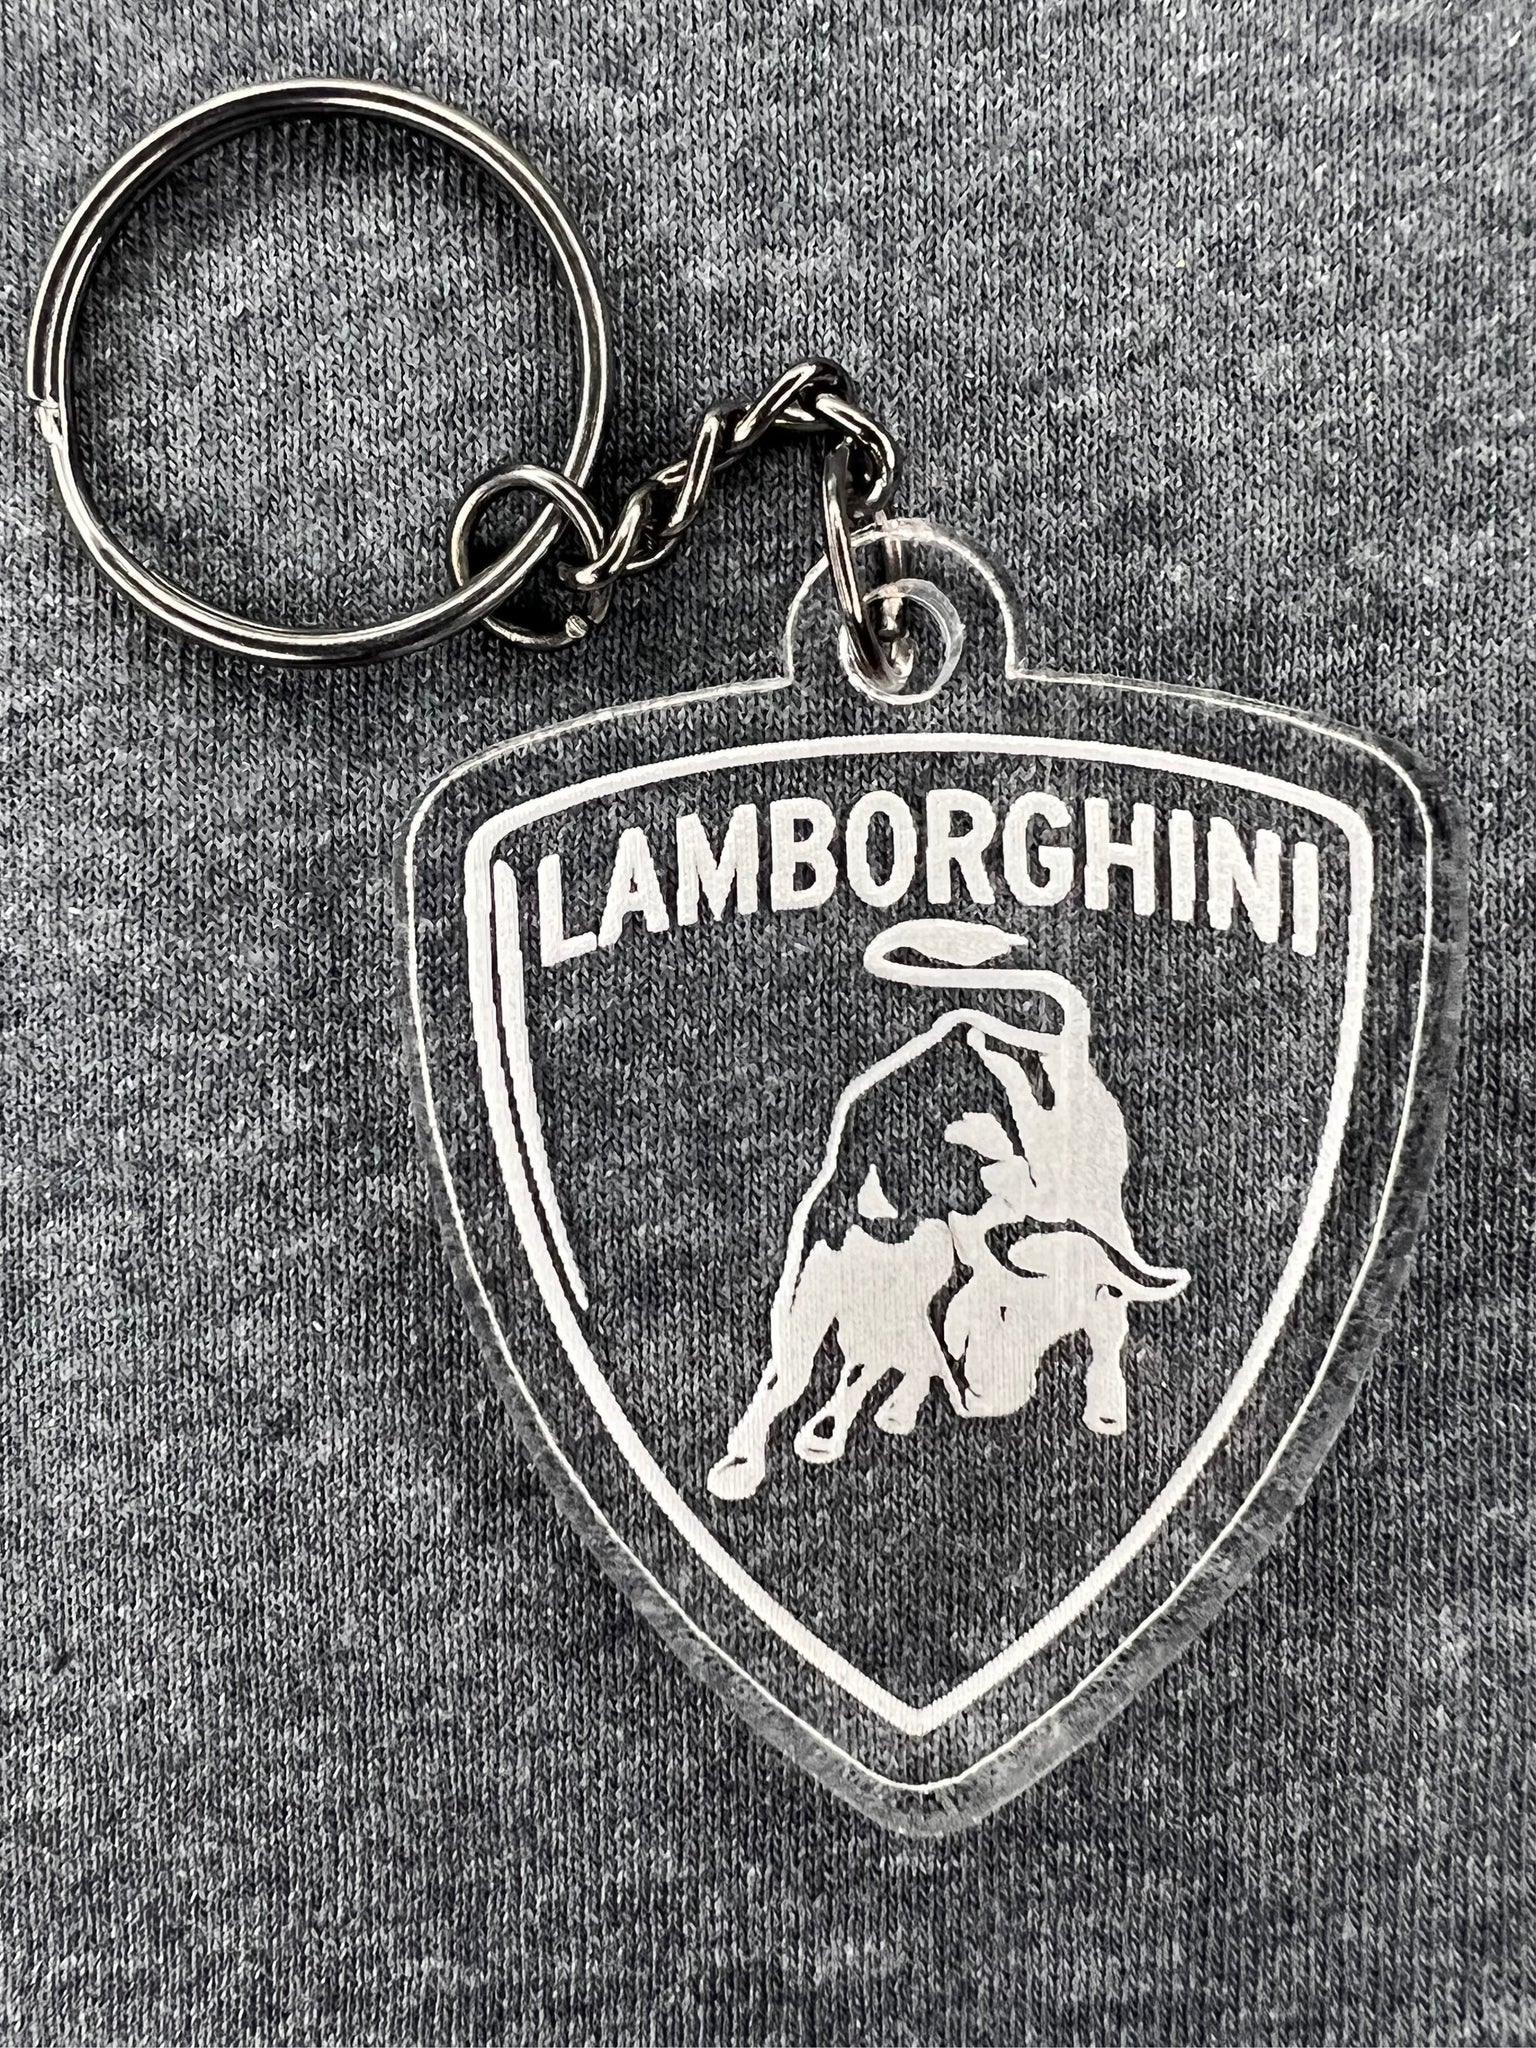 Lamborghini keychain - .de